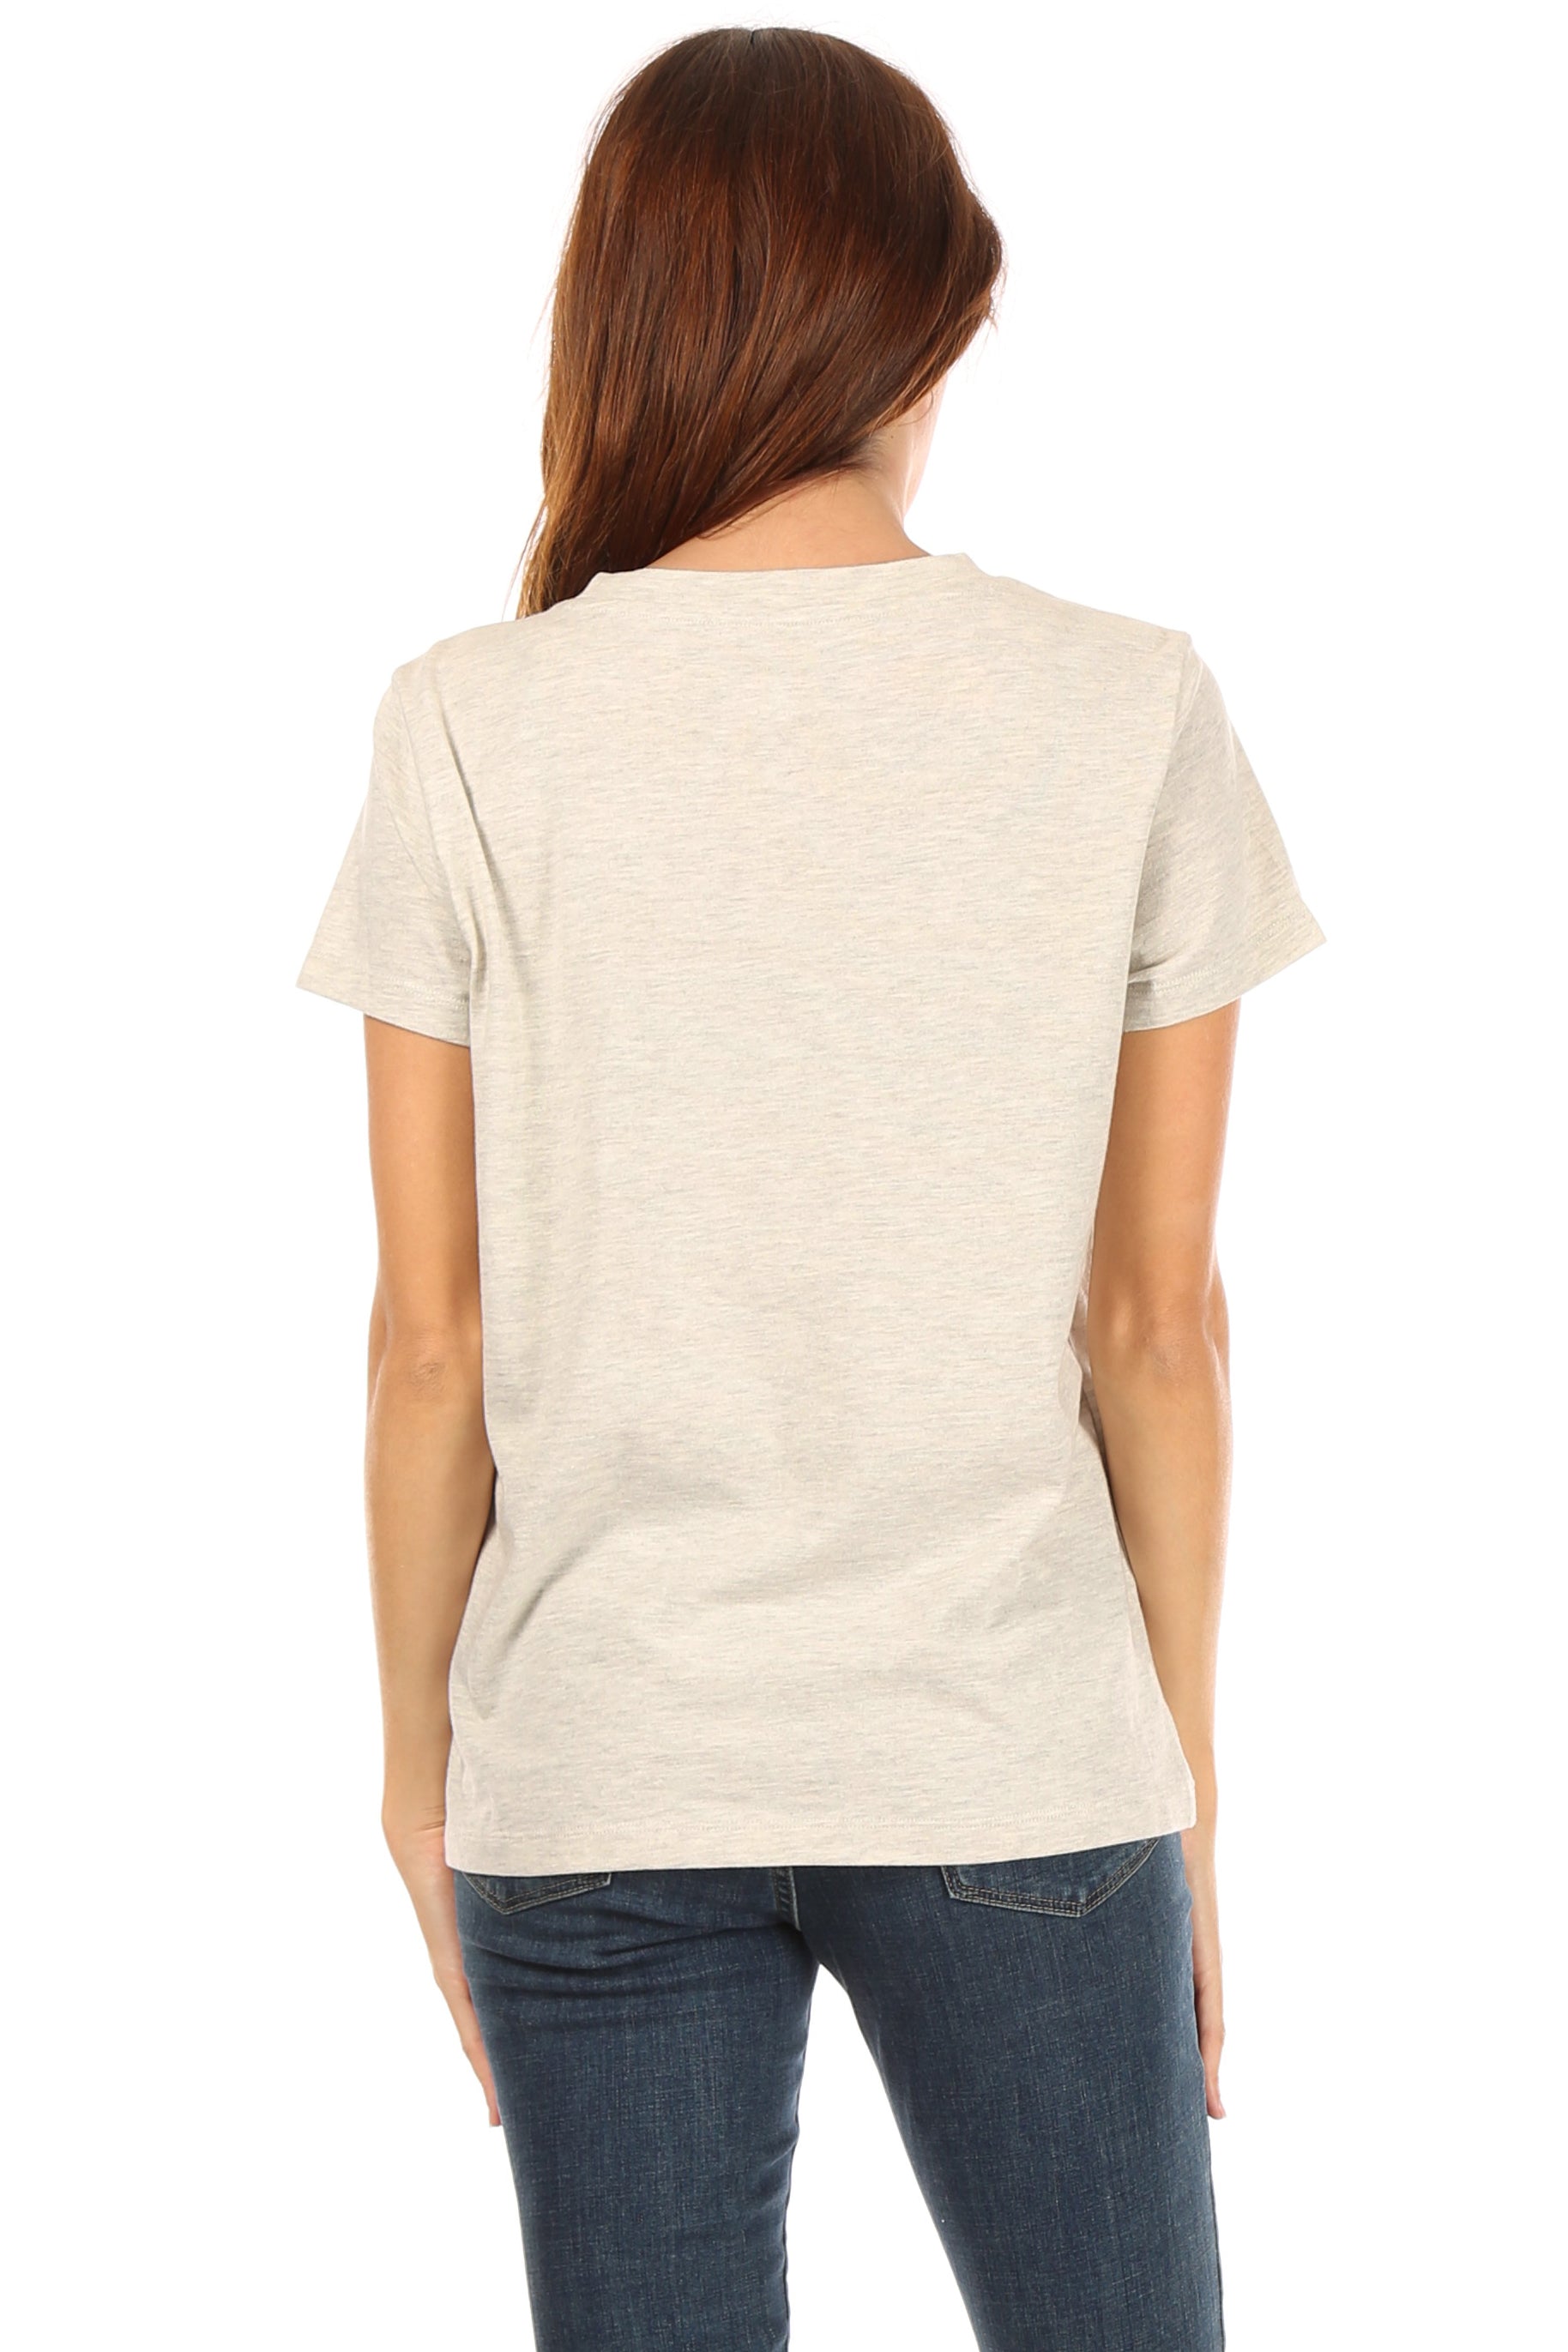 Women's "HAPPY CAMPER" Short Sleeve Icon T-Shirt - Shop Rae Dunn Apparel and Sleepwear